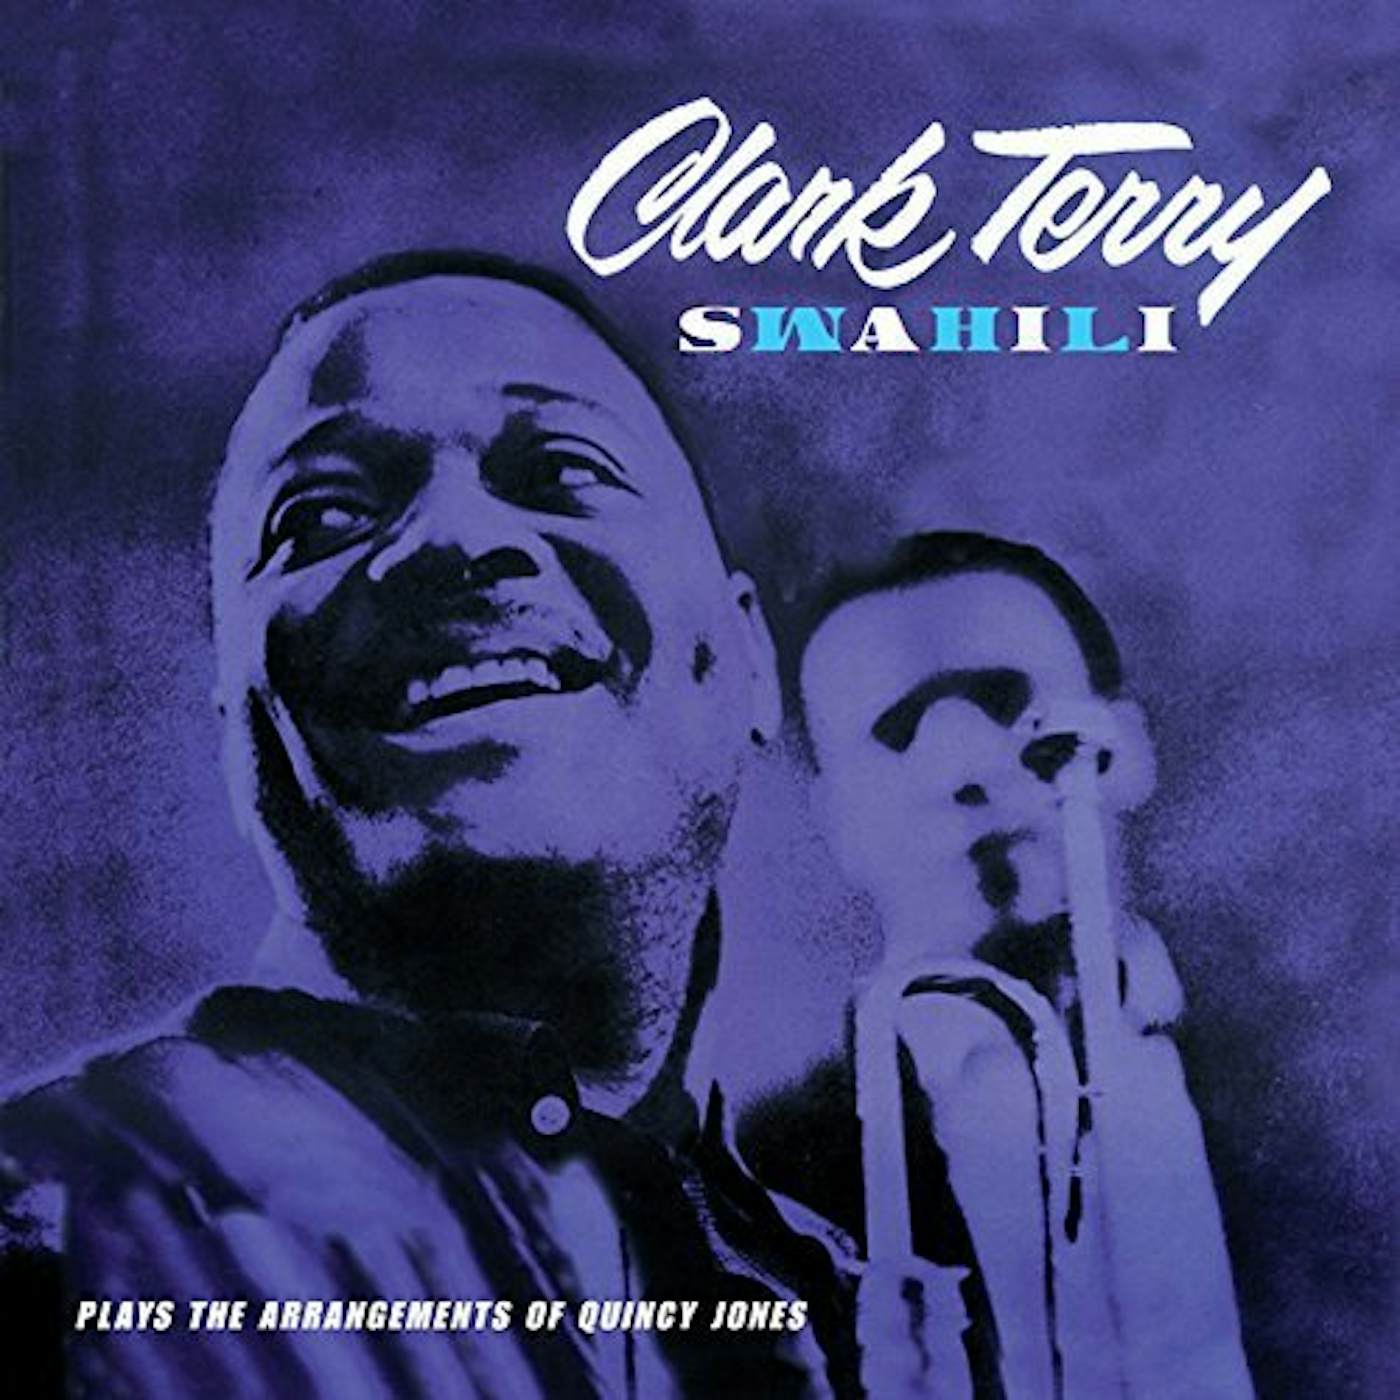 Clark Terry SWAHILI + 8 BONUS TRACKS CD